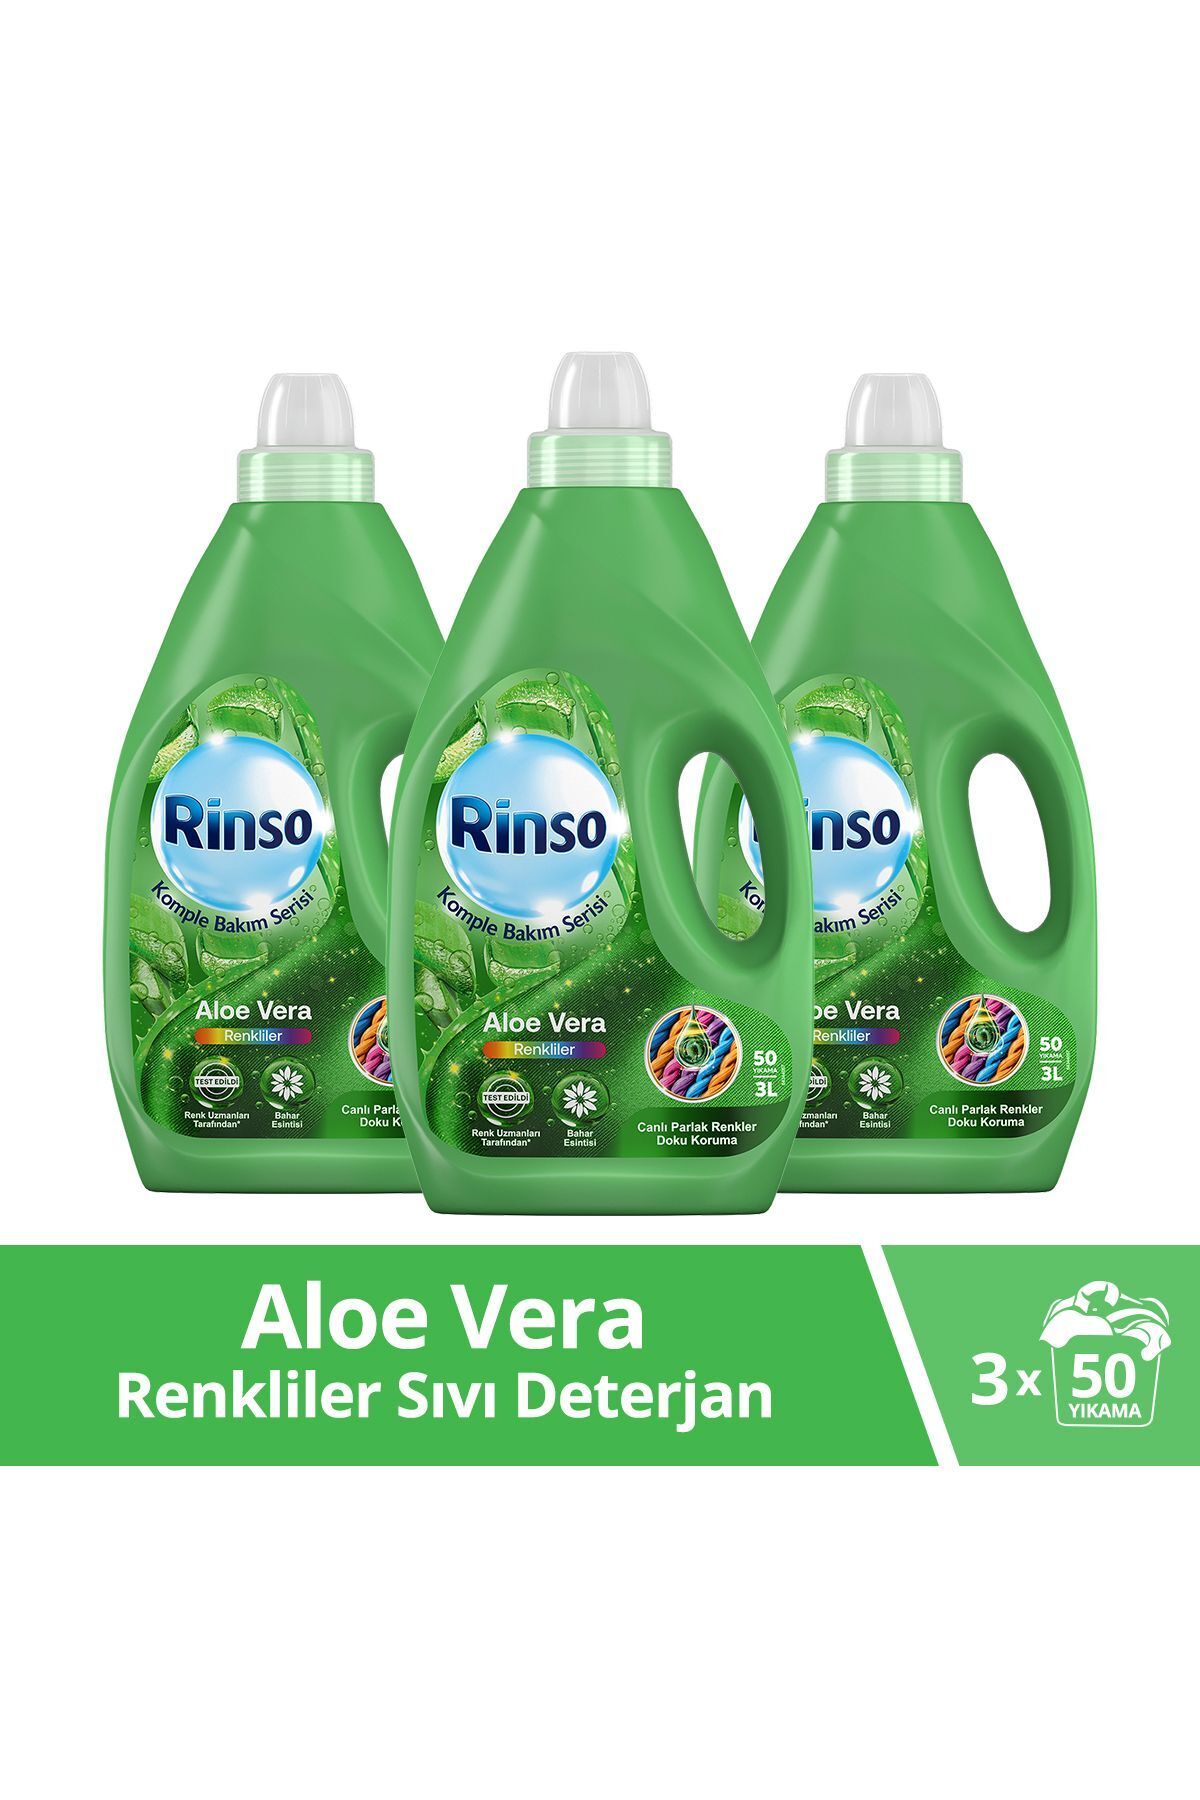 Rinso Sıvı Deterjan Aloe Vera Renkiler 3lt 3 Adet